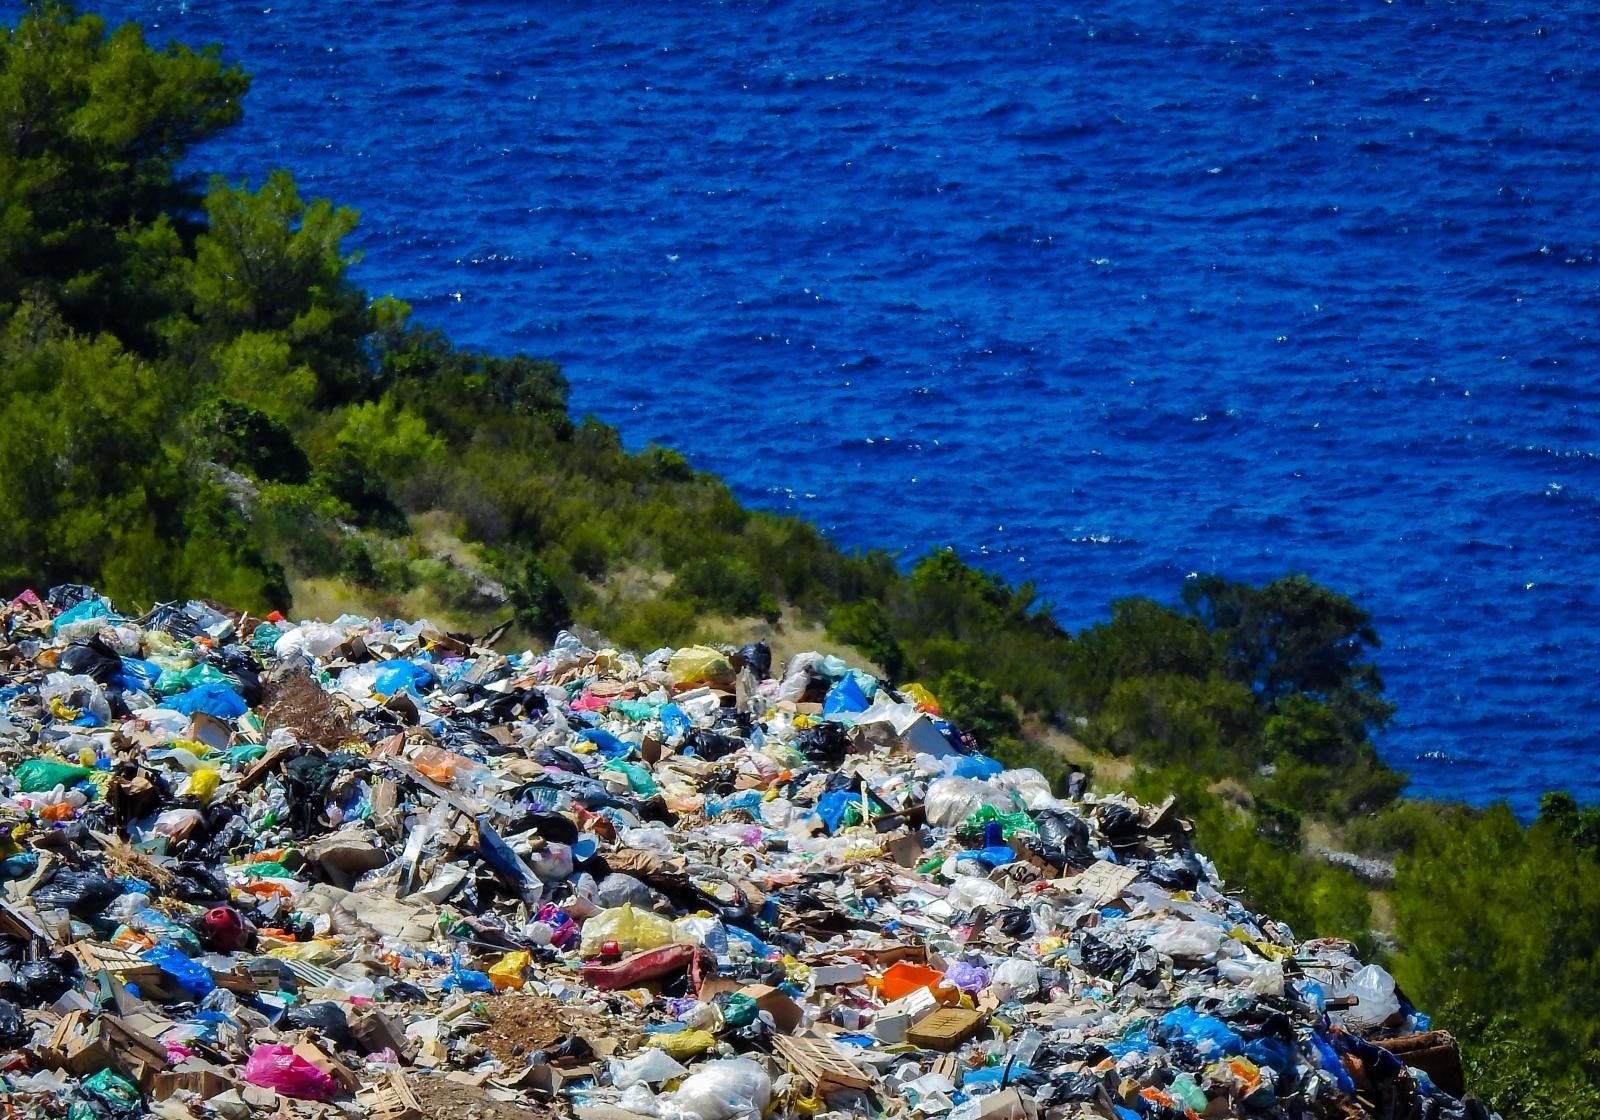 03.08.2019. Komiza -  Odlagaliste otpada nedaleko od Komize na otoku Visu  Photo: Josip Regovic/PIXSELL